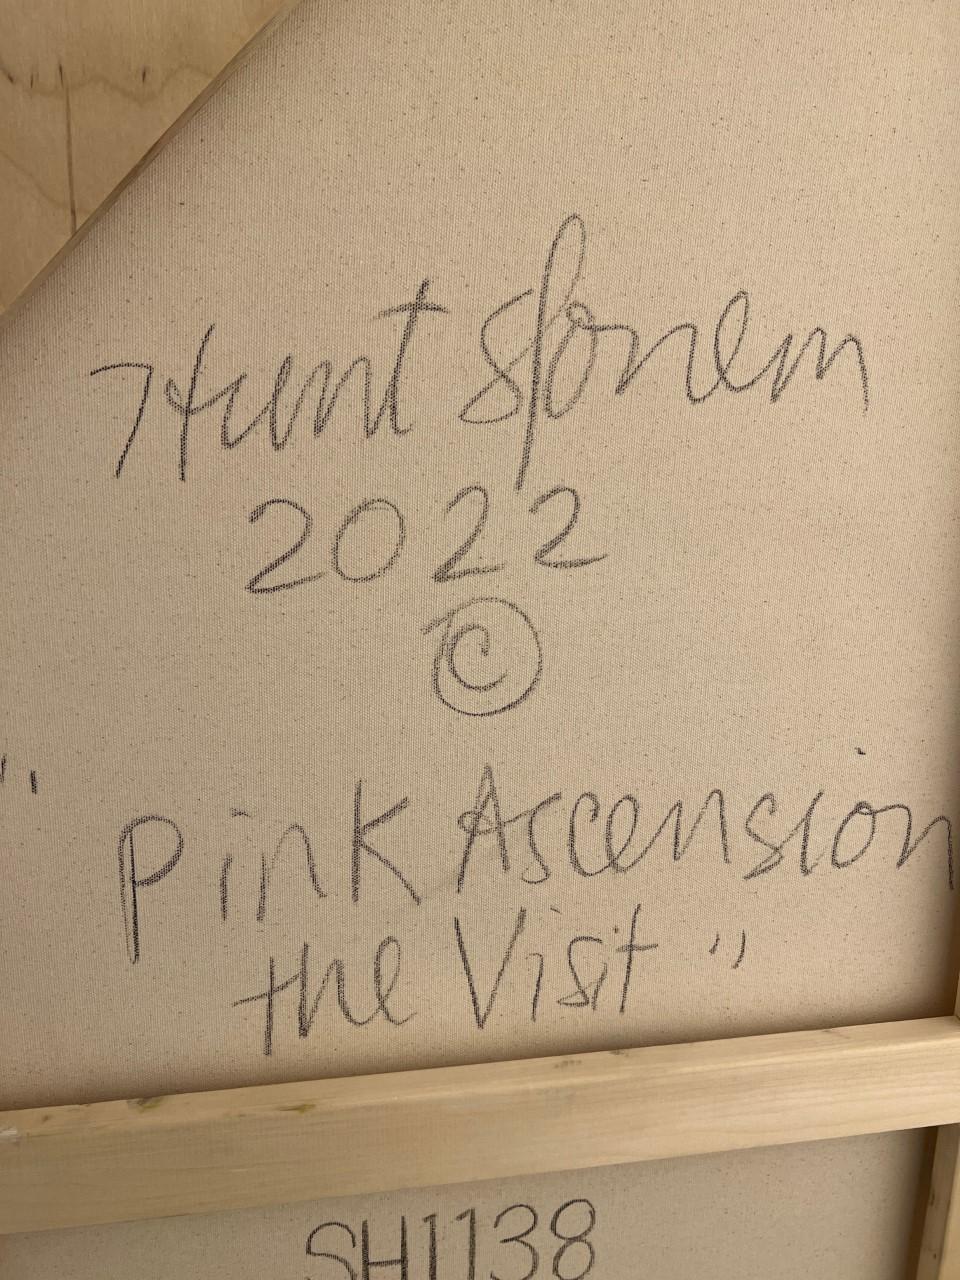 Pink Ascension (The Visit) - Painting by Hunt Slonem